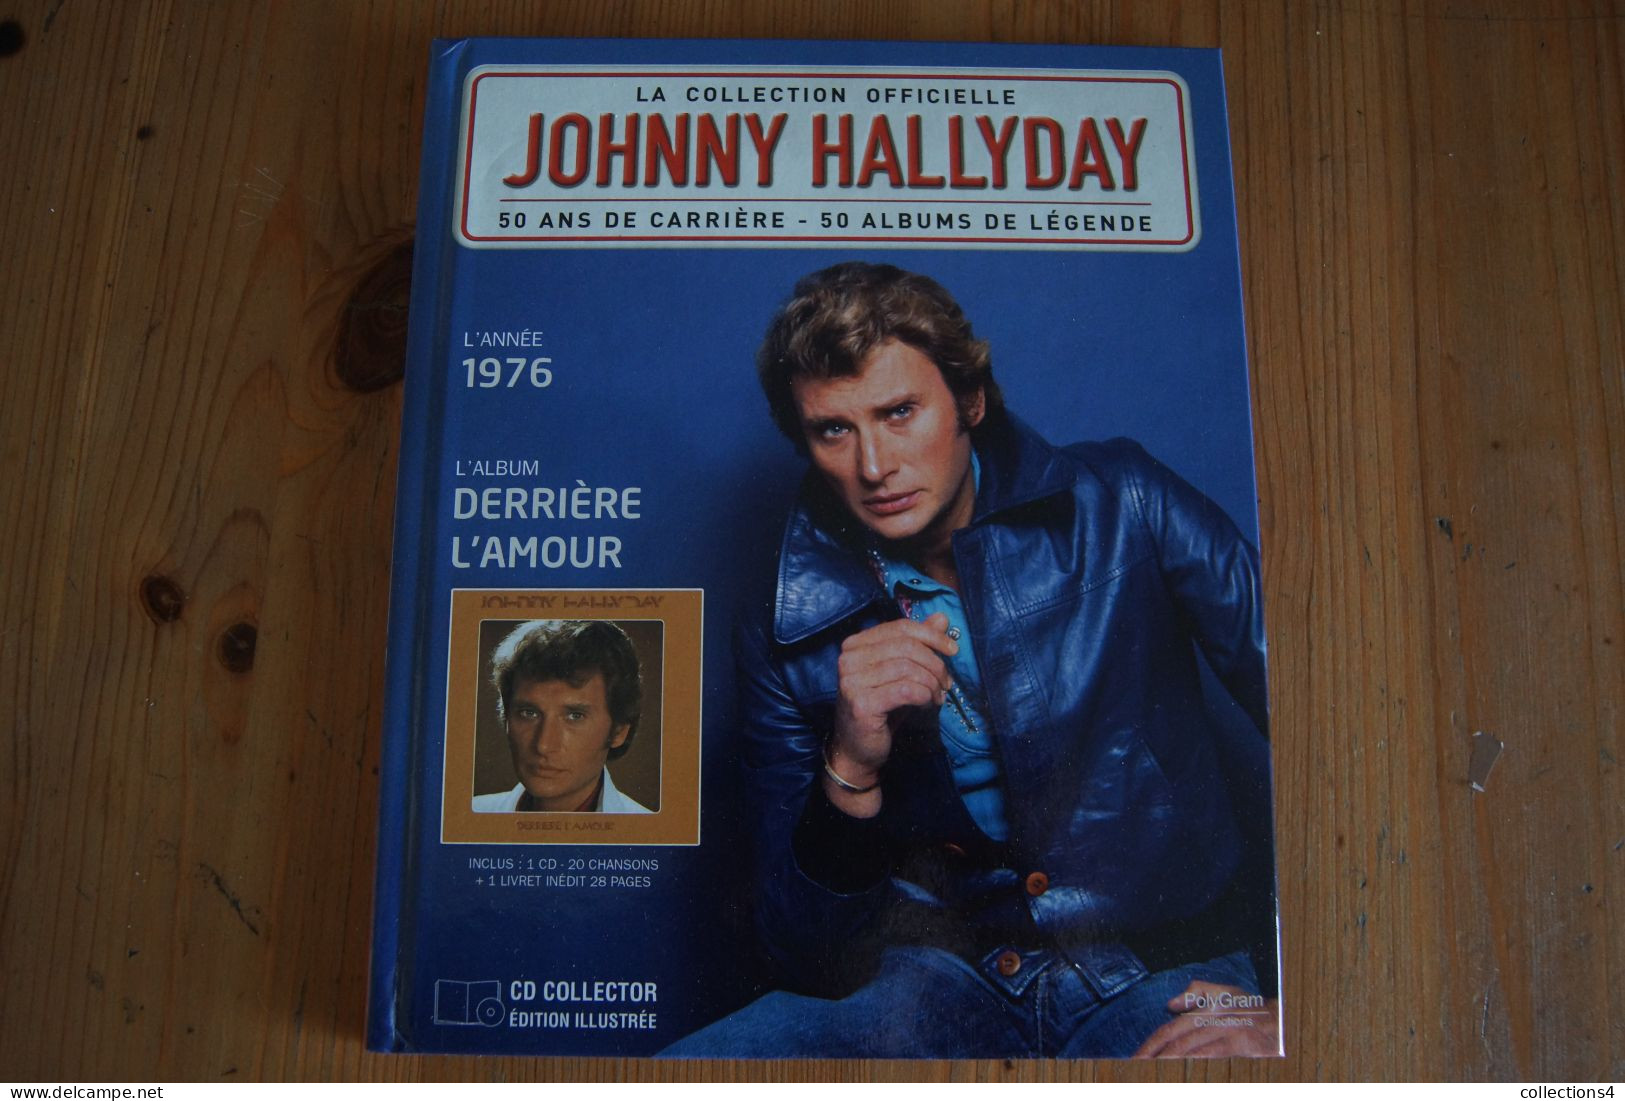 JOHNNY HALLYDAY L ANNEE 1976 DERRIERE L AMOUR LIVRE CD COLLECTION OFFICIELLE SORTIE 2011 - Rock